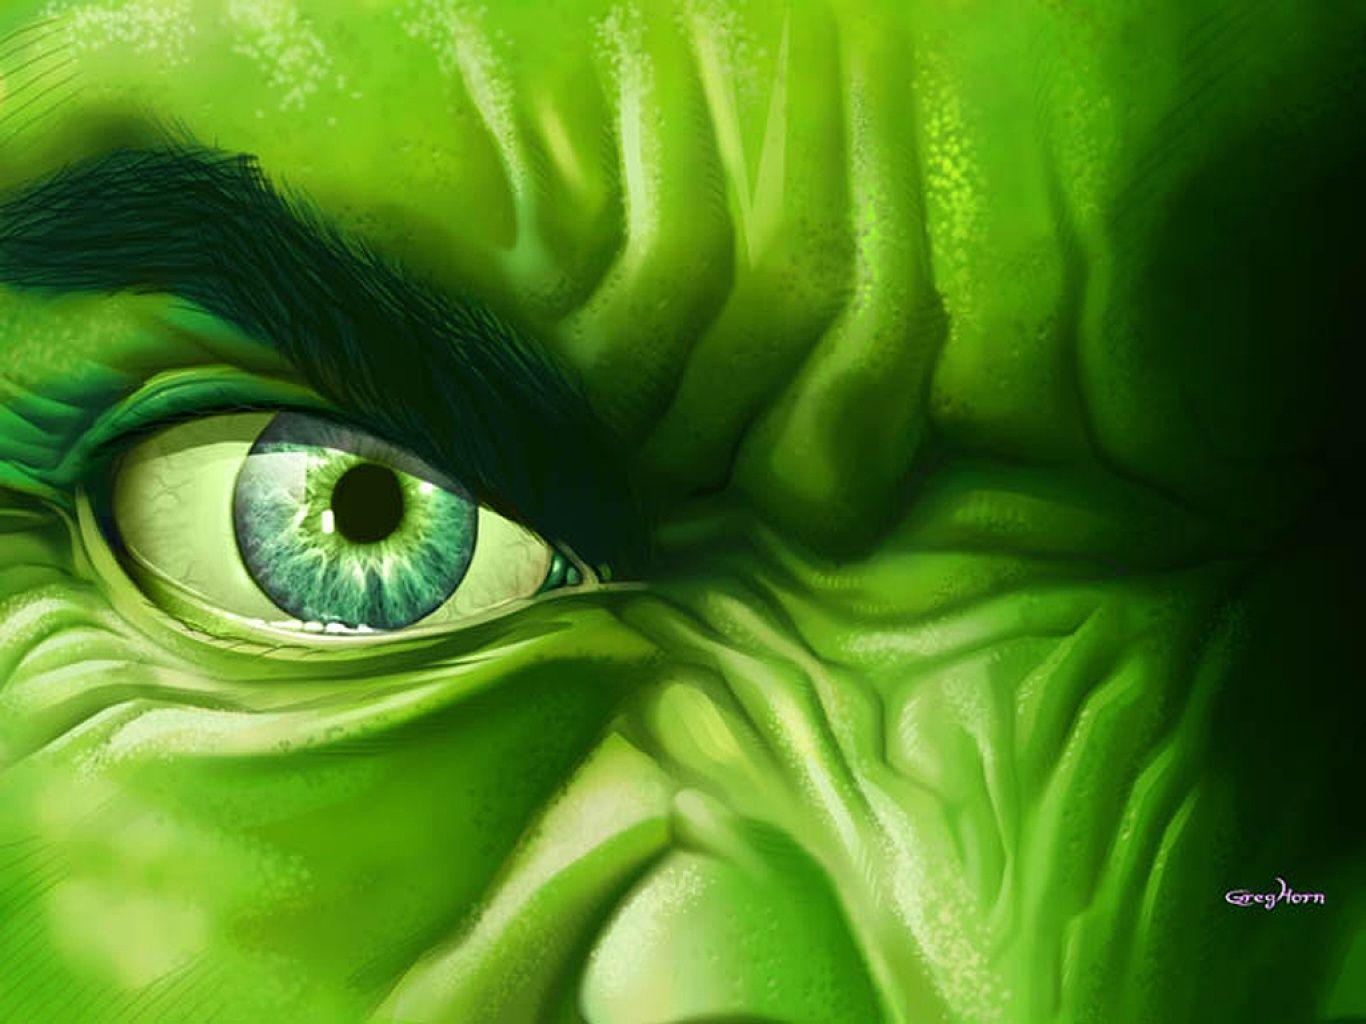 Hulk Face Wallpaper High Resolution Wallpaper Full Size. Gabbo's